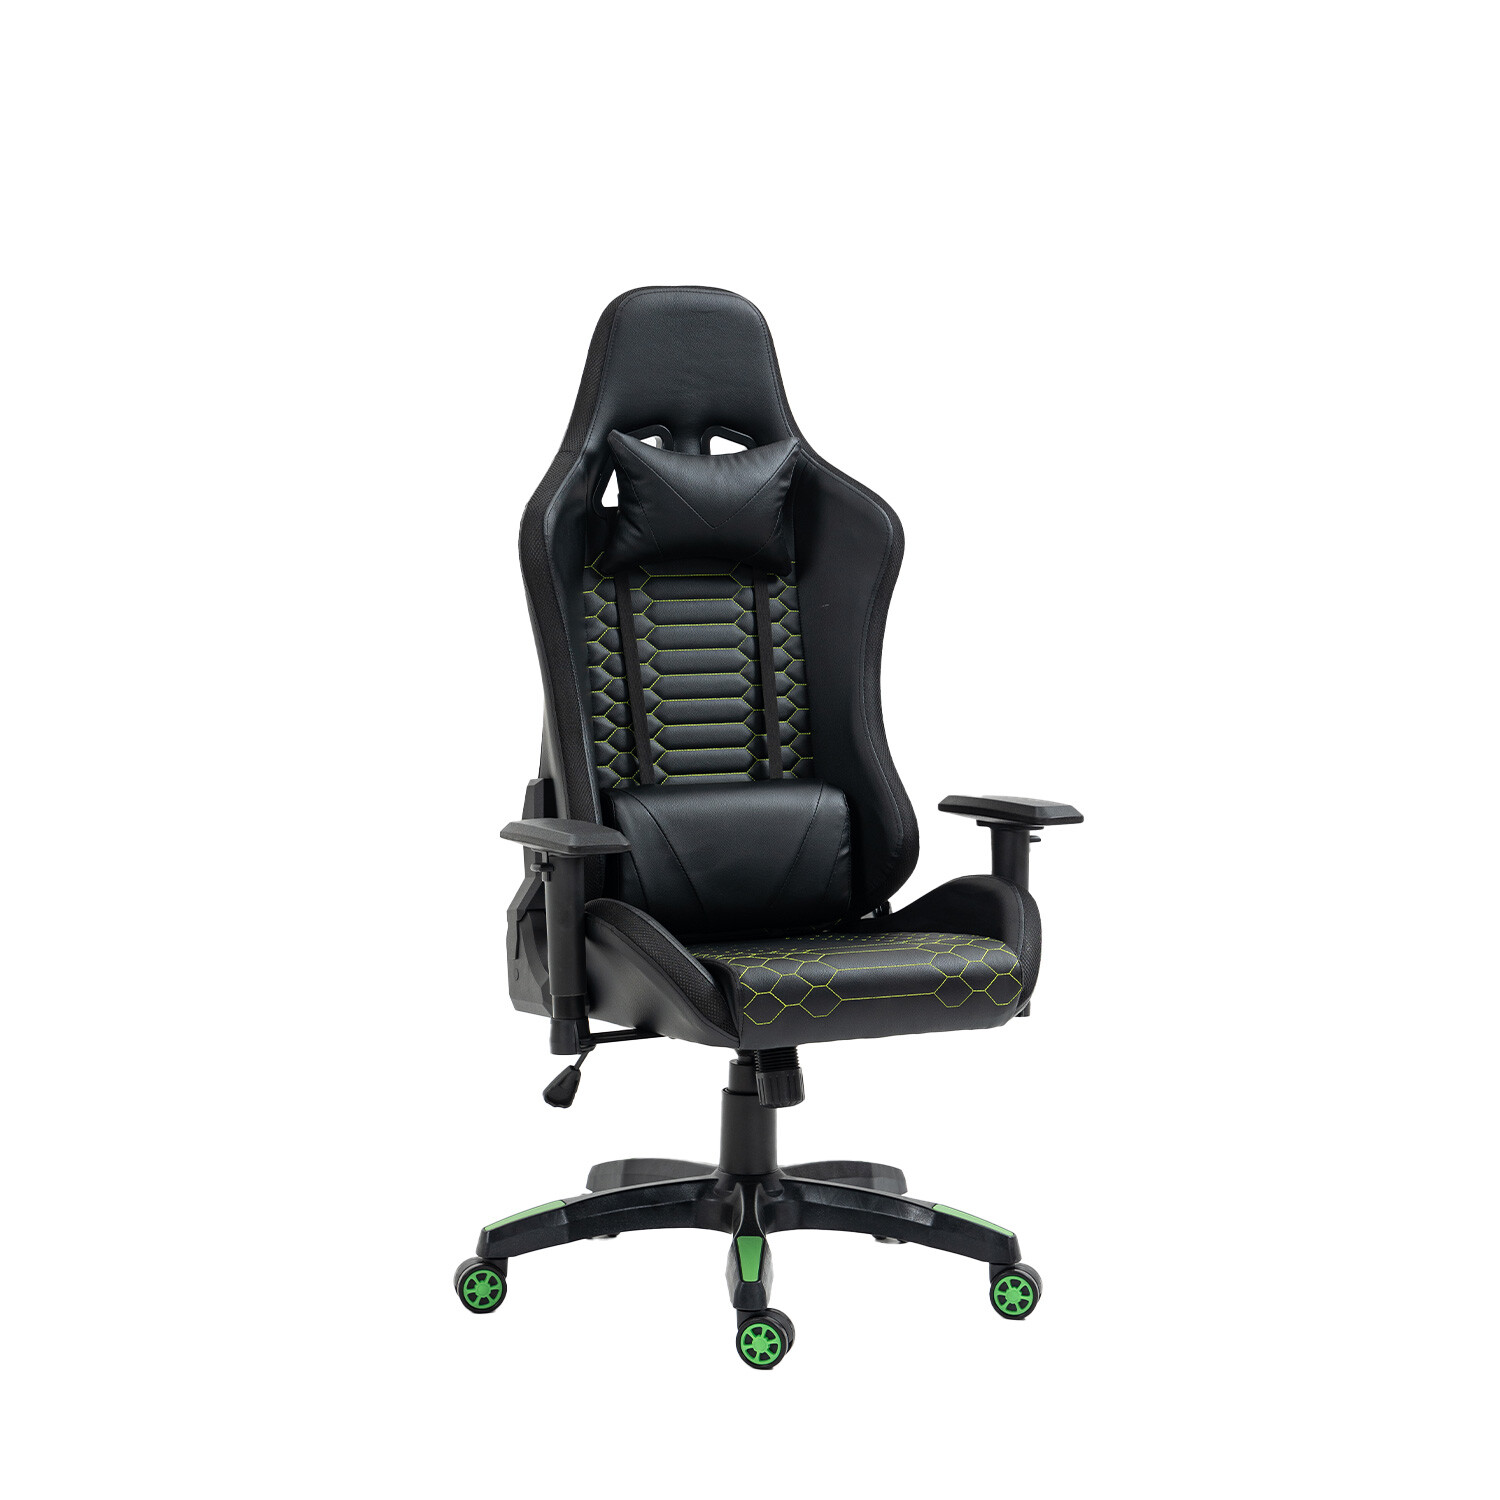 Triton LED Gaming Chair - Black Image 5